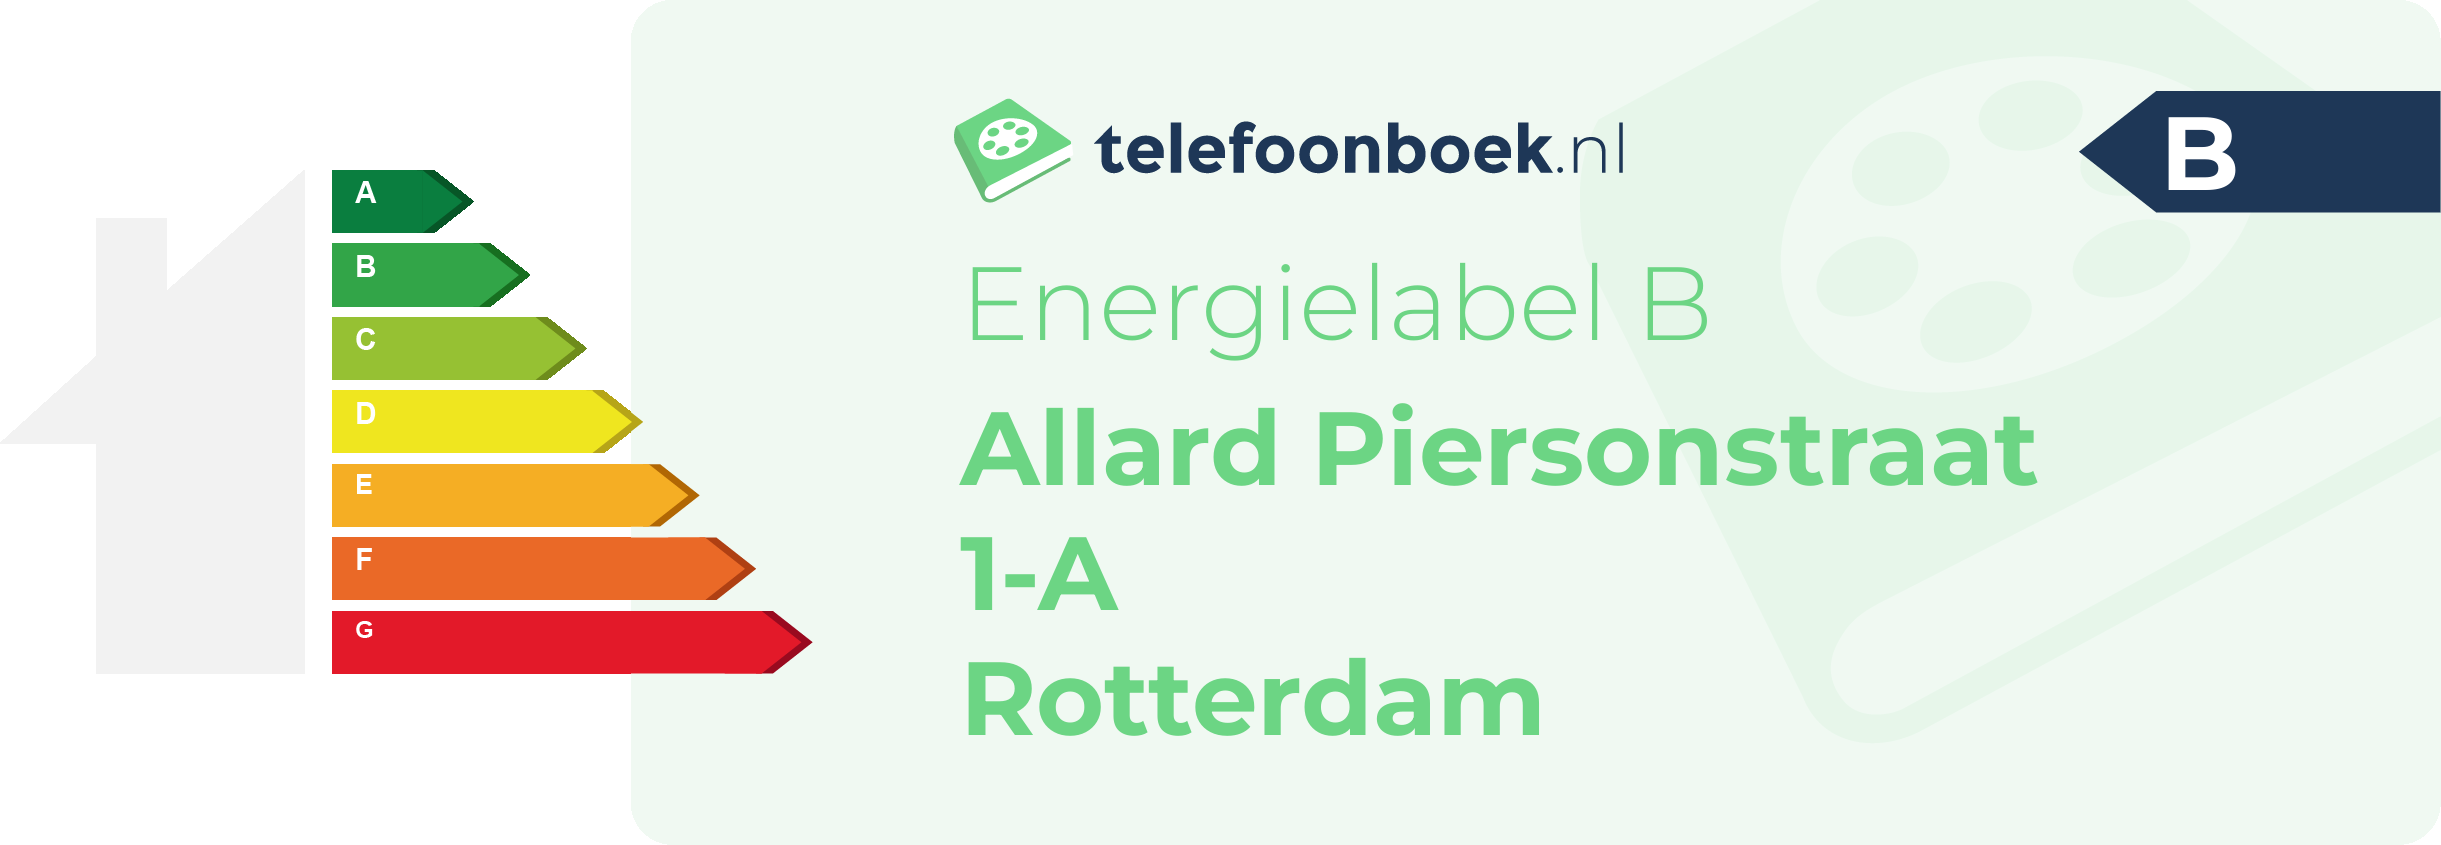 Energielabel Allard Piersonstraat 1-A Rotterdam